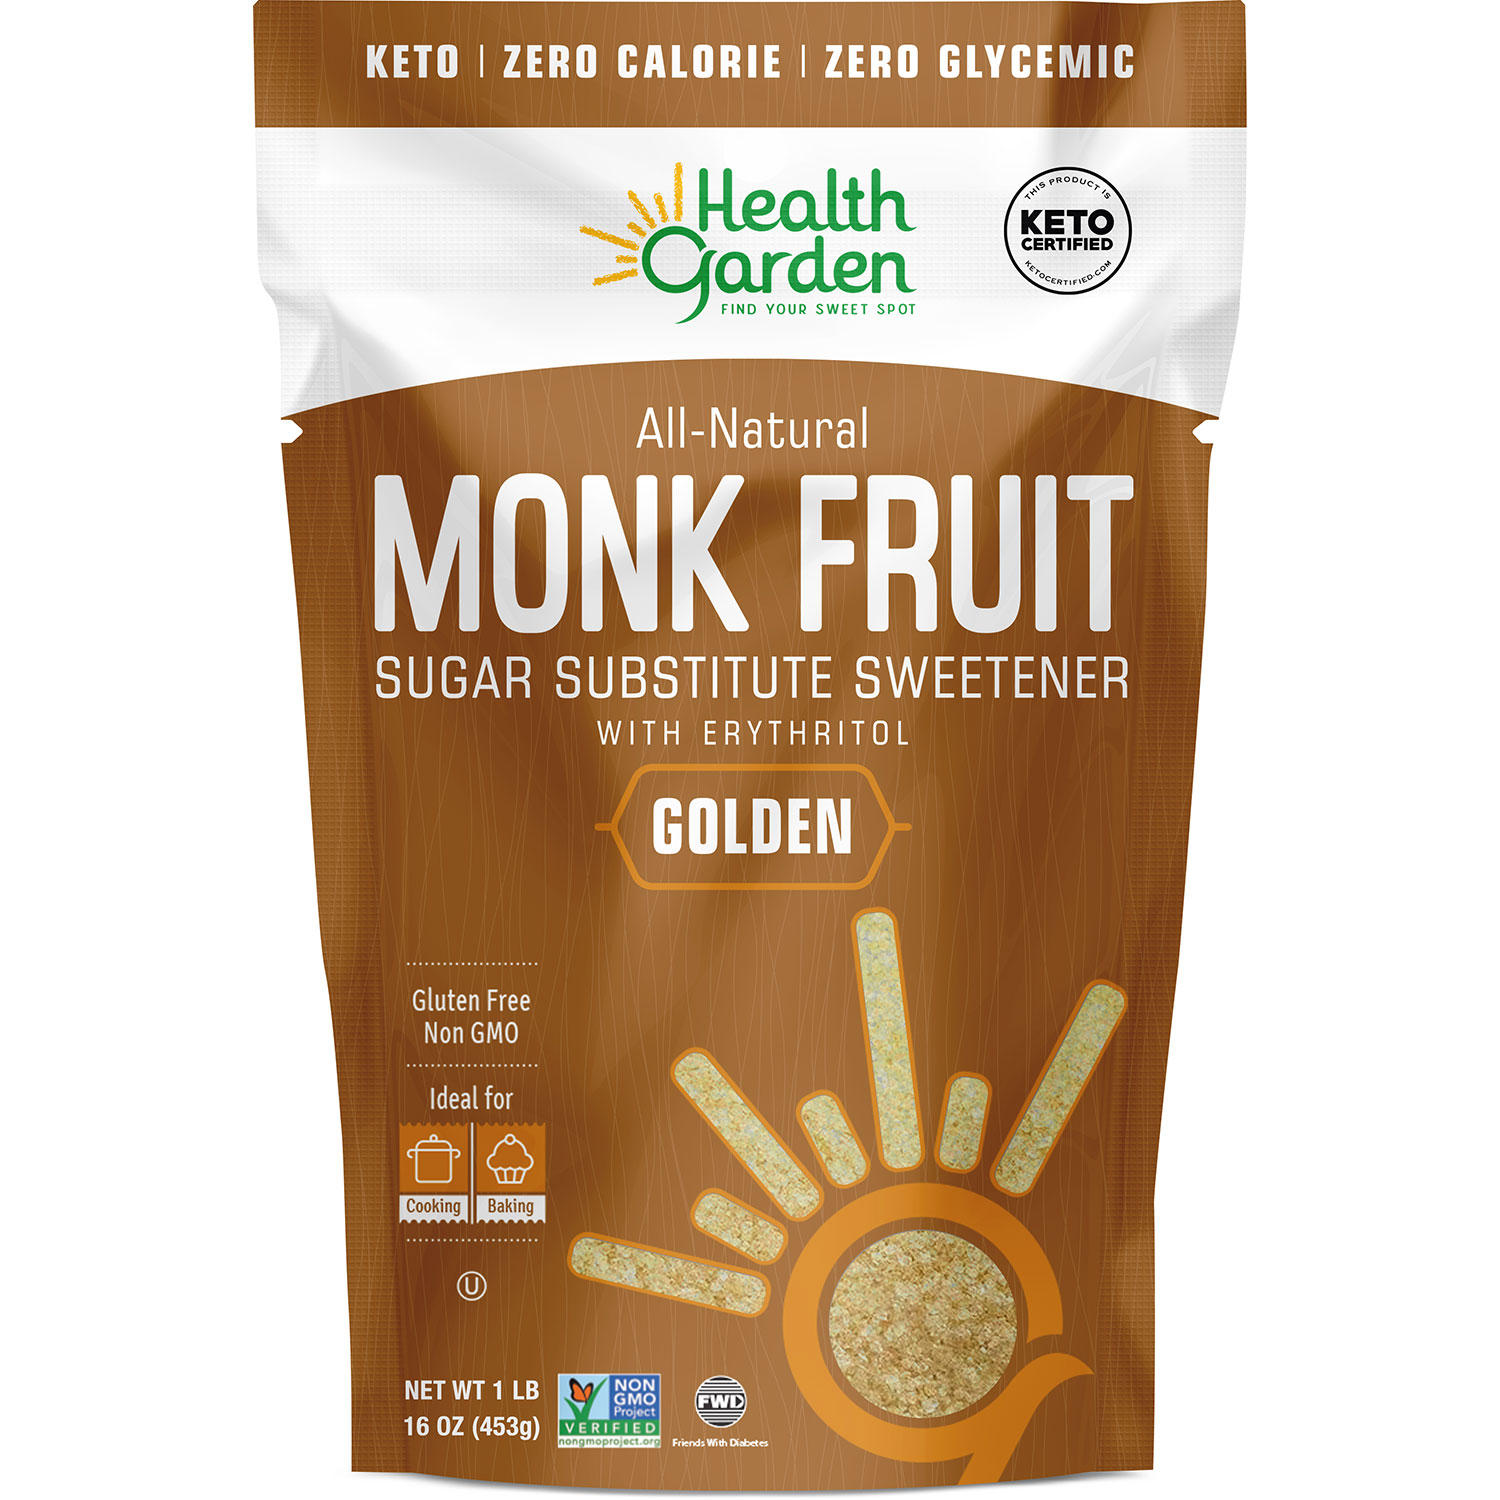 Health Garden Monk Fruit Sweetener, Golden- Non GMO – Gluten Free – Sugar Substitute – Kosher – Keto Friendly (1 lb)